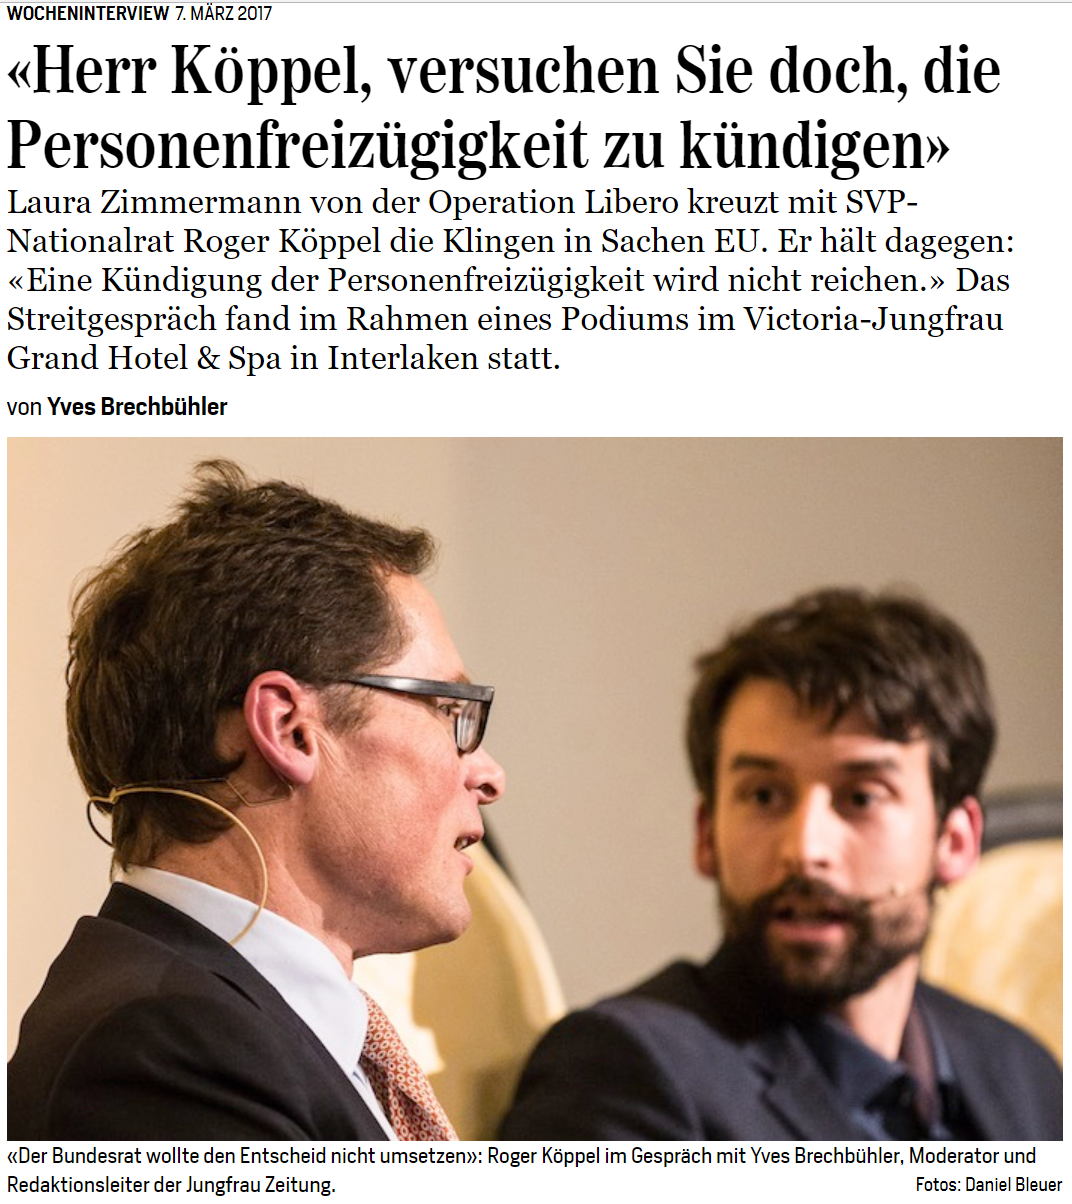 Europa_Jungfrauzeitung